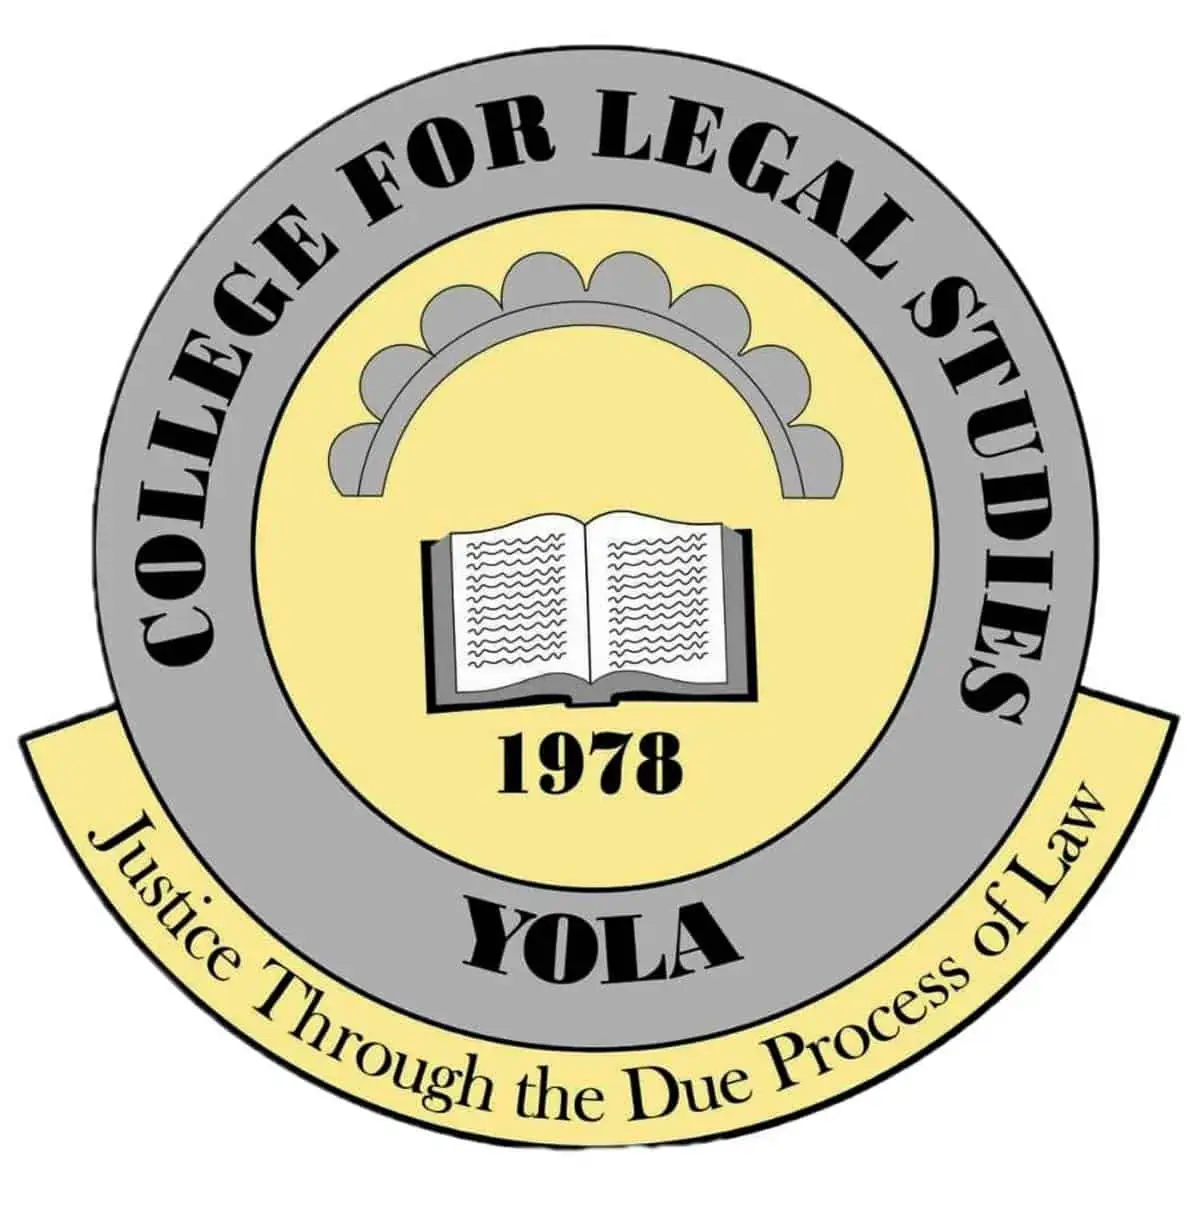 College of Legal Studies Yola CLSYOLA